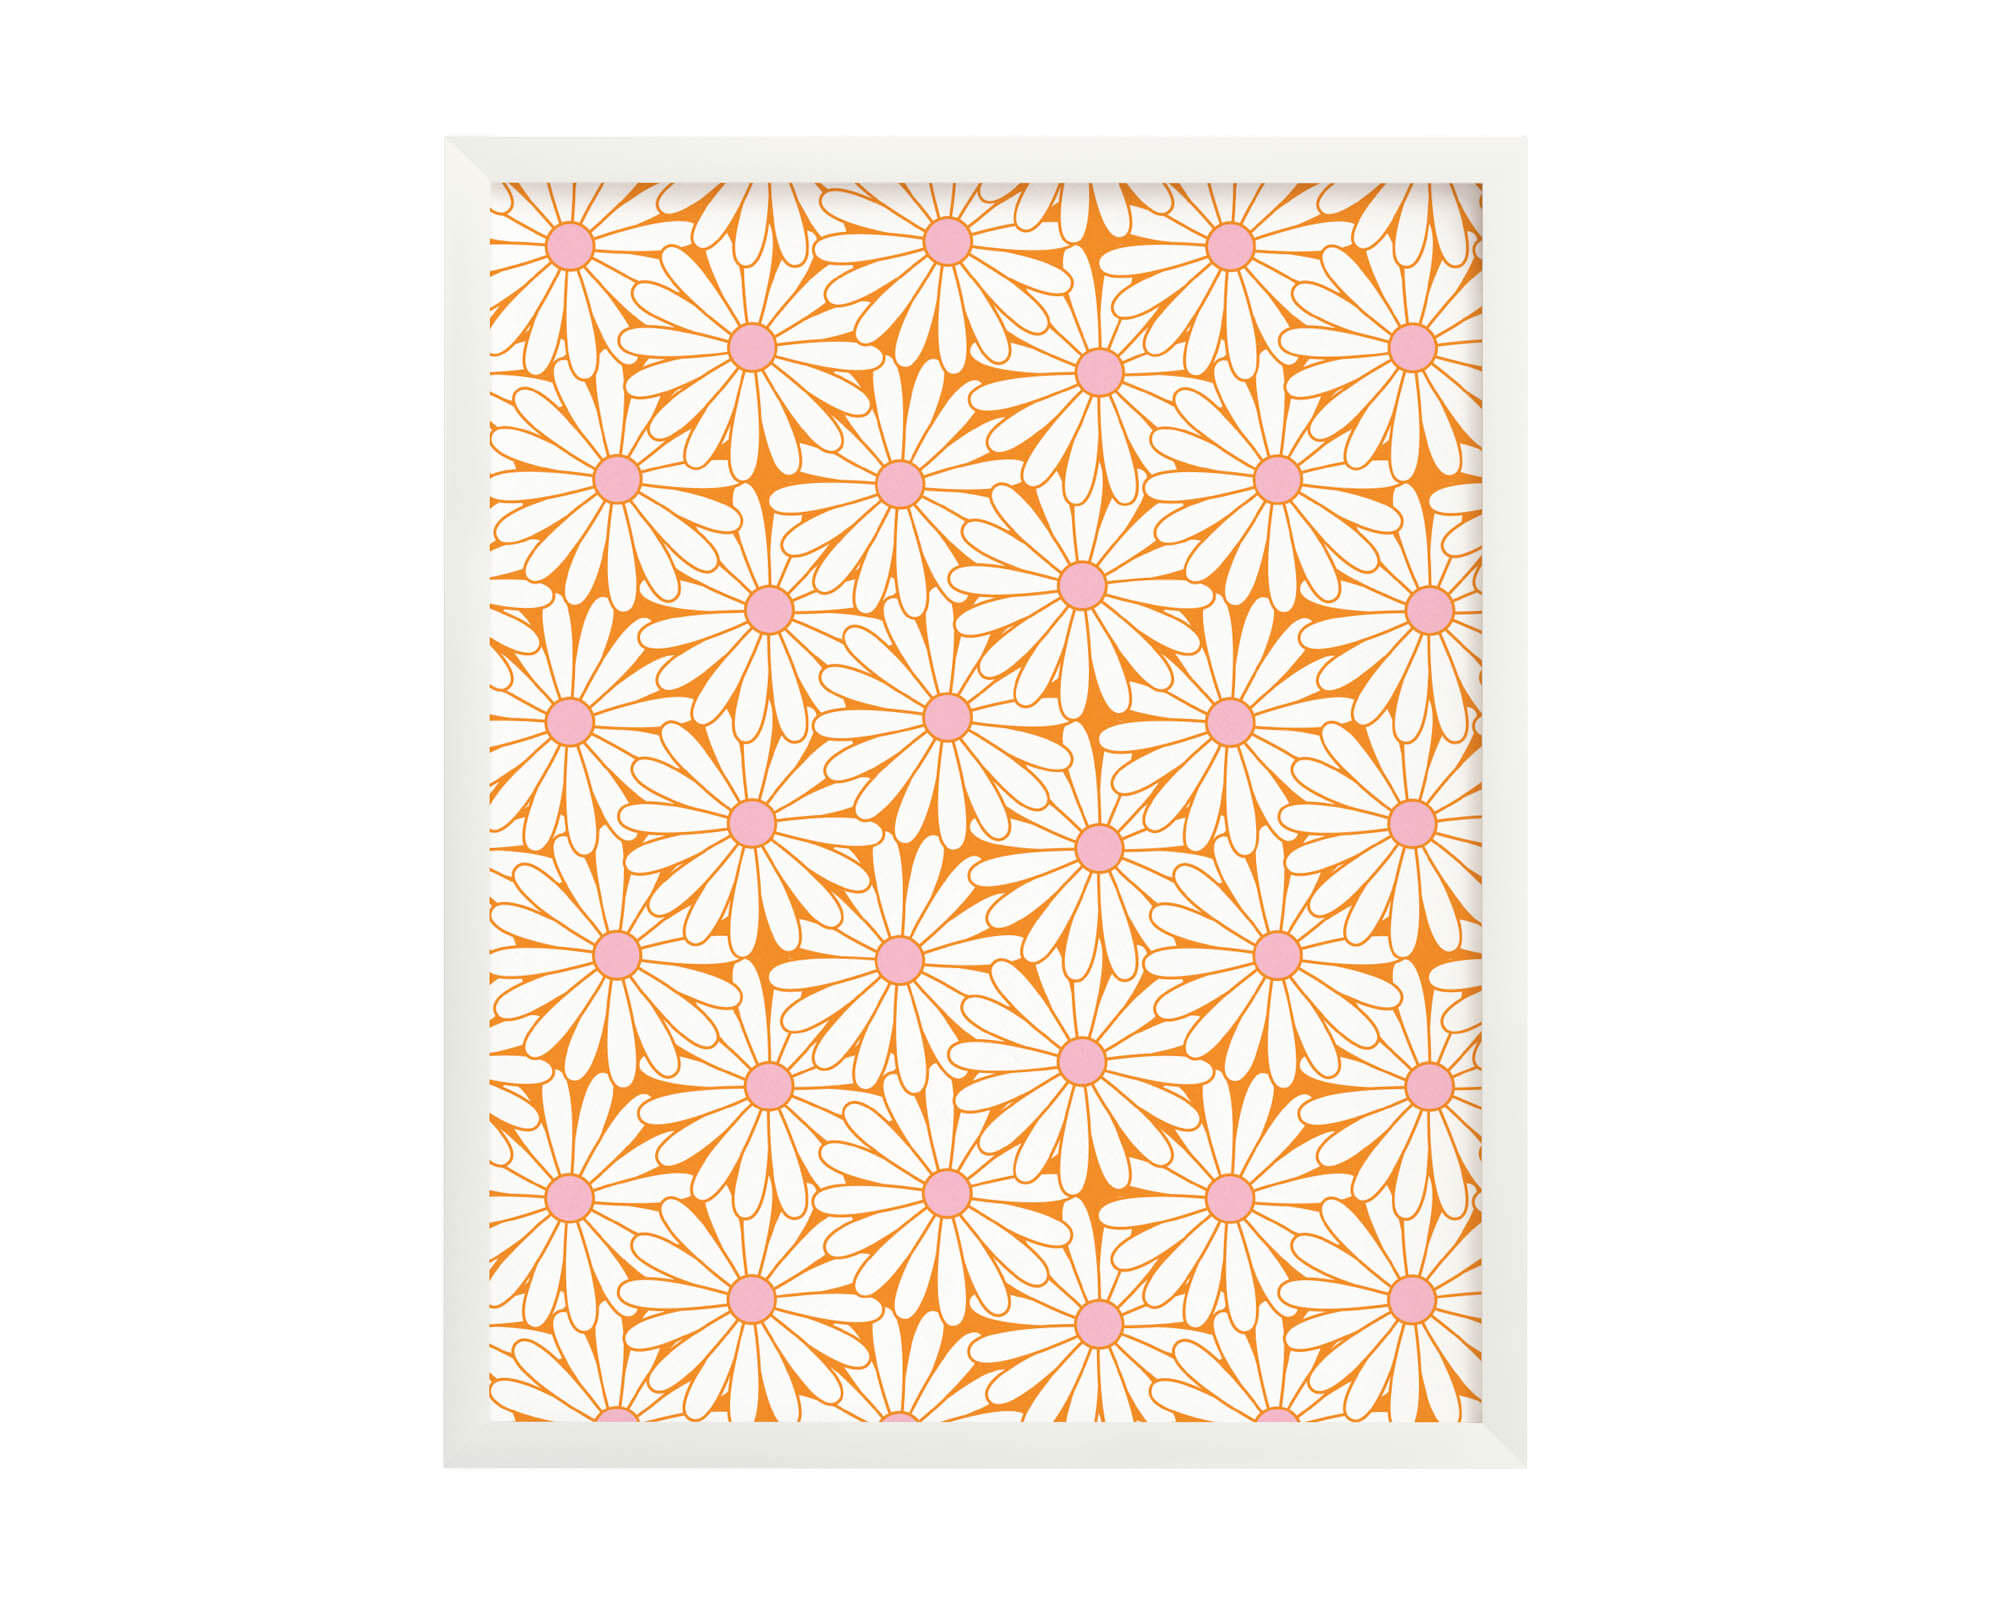 "Daisy Love" vibrant orange and pink floral daisy pattern archival giclée art print. Made in USA by My Darlin' @mydarlin_bk